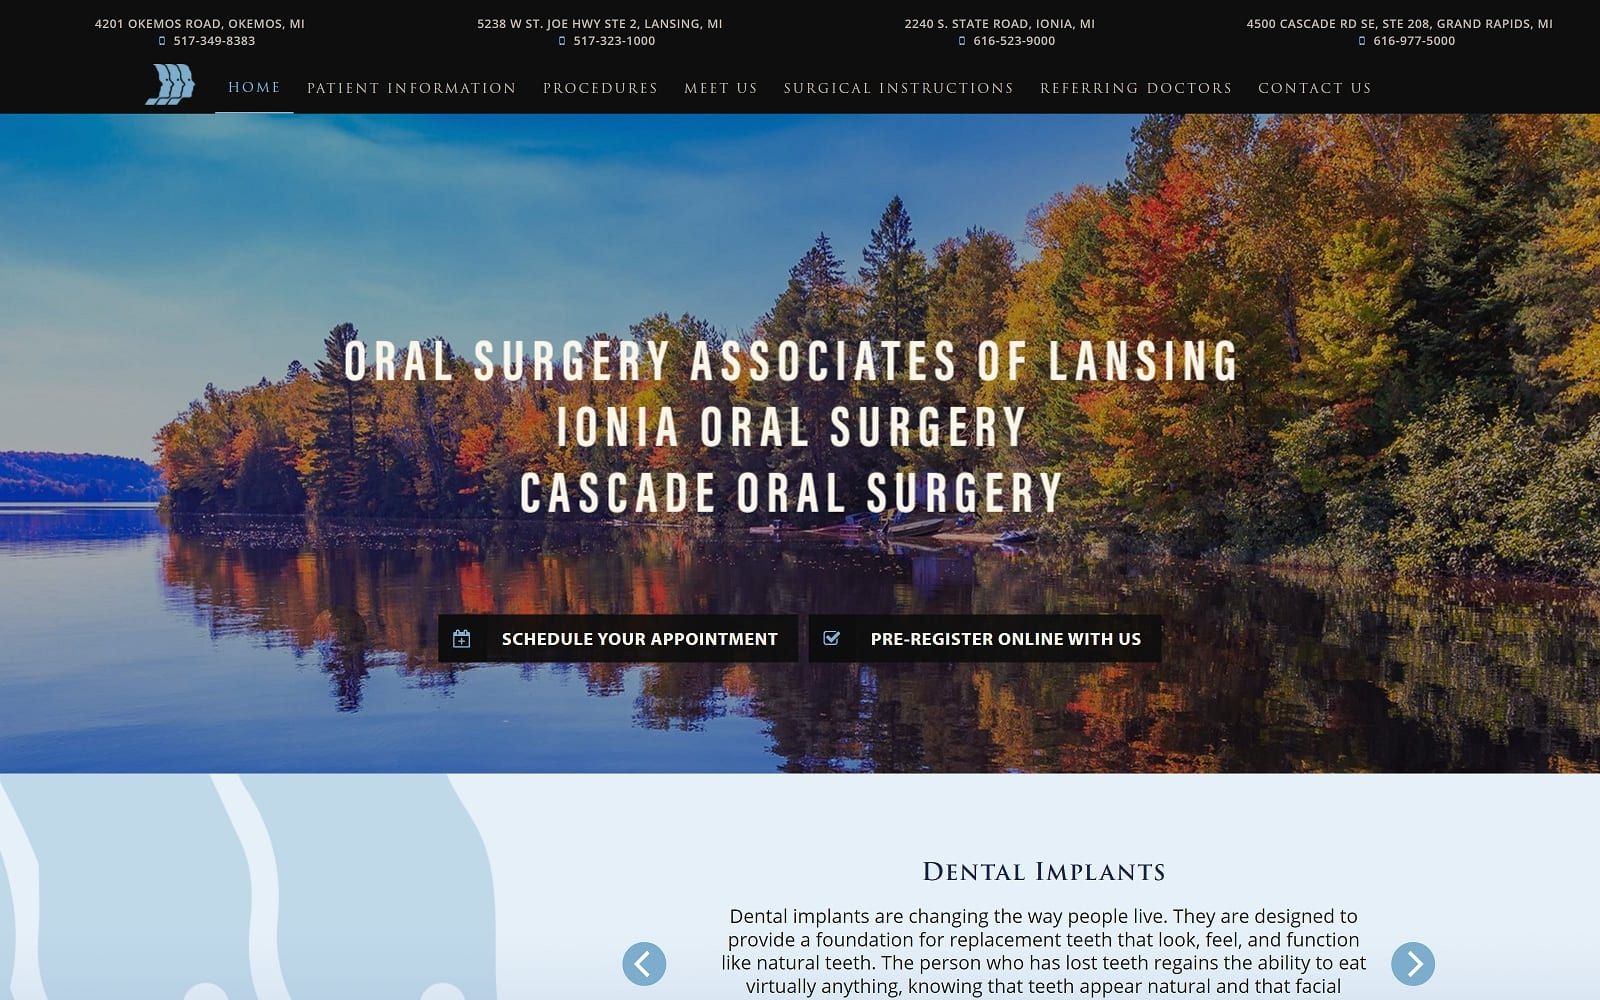 The screenshot of cascade oral surgery osalansing. Com website